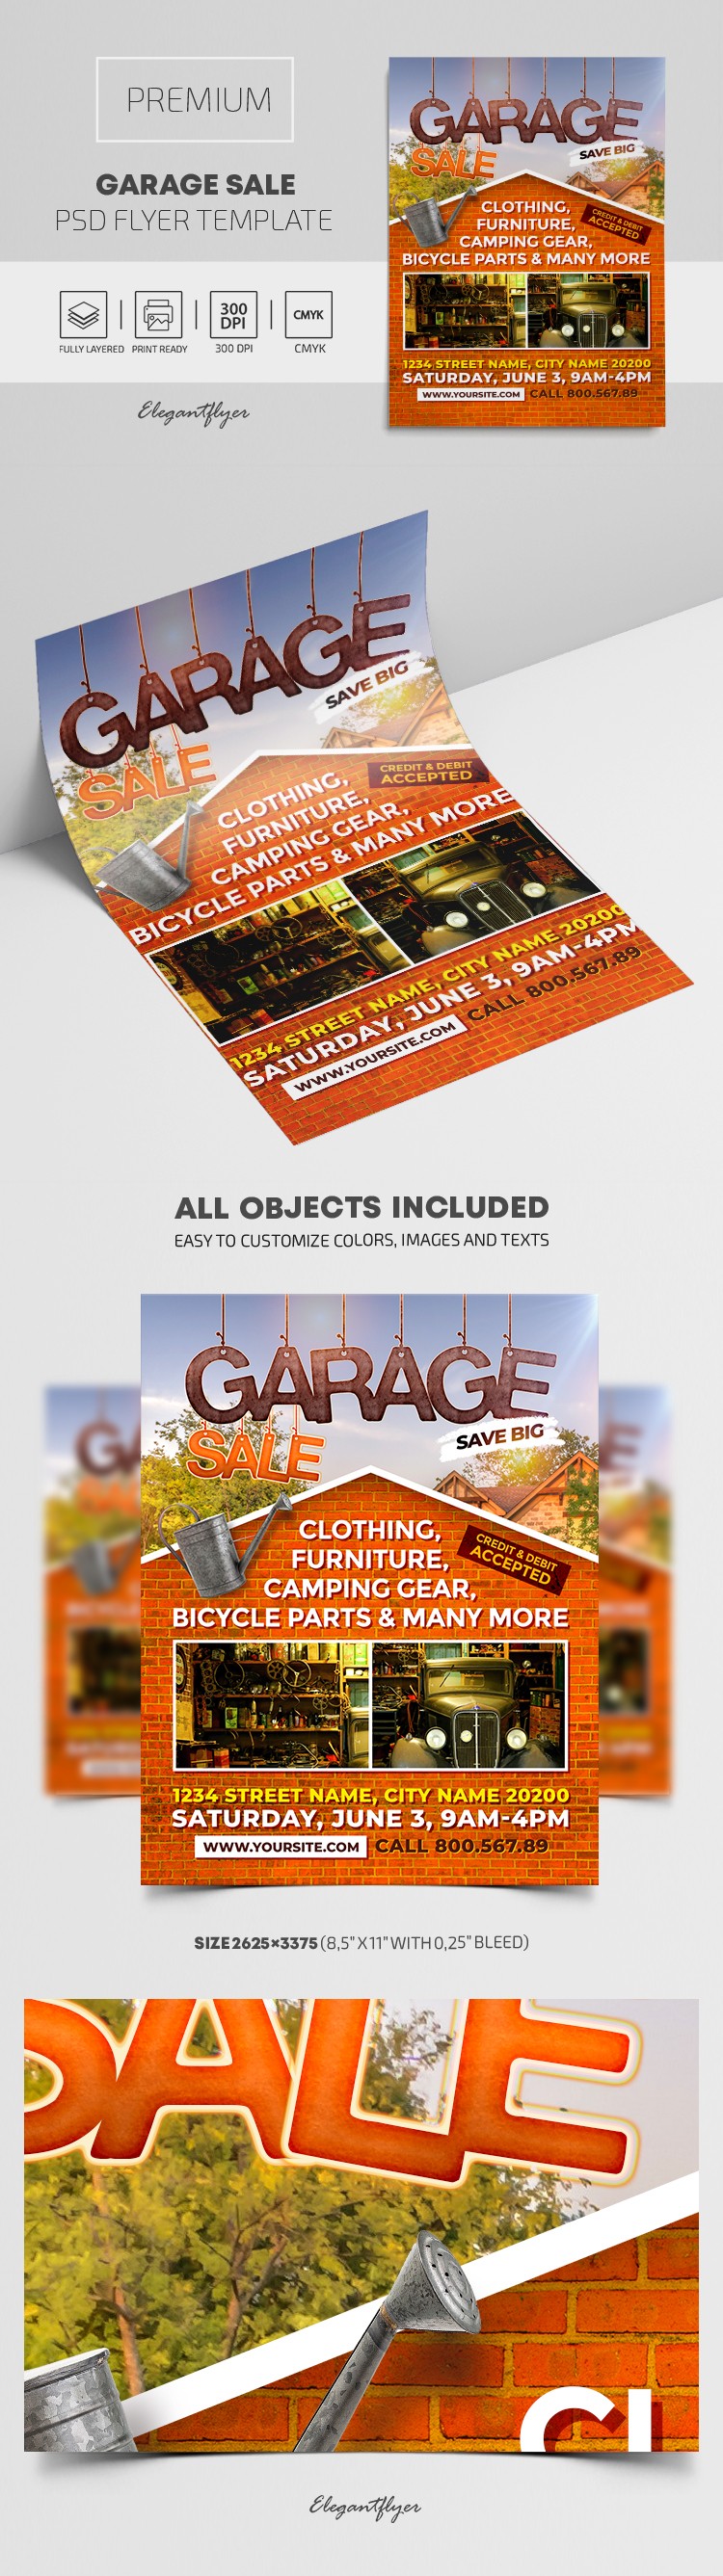 Affiche de vente de garage by ElegantFlyer